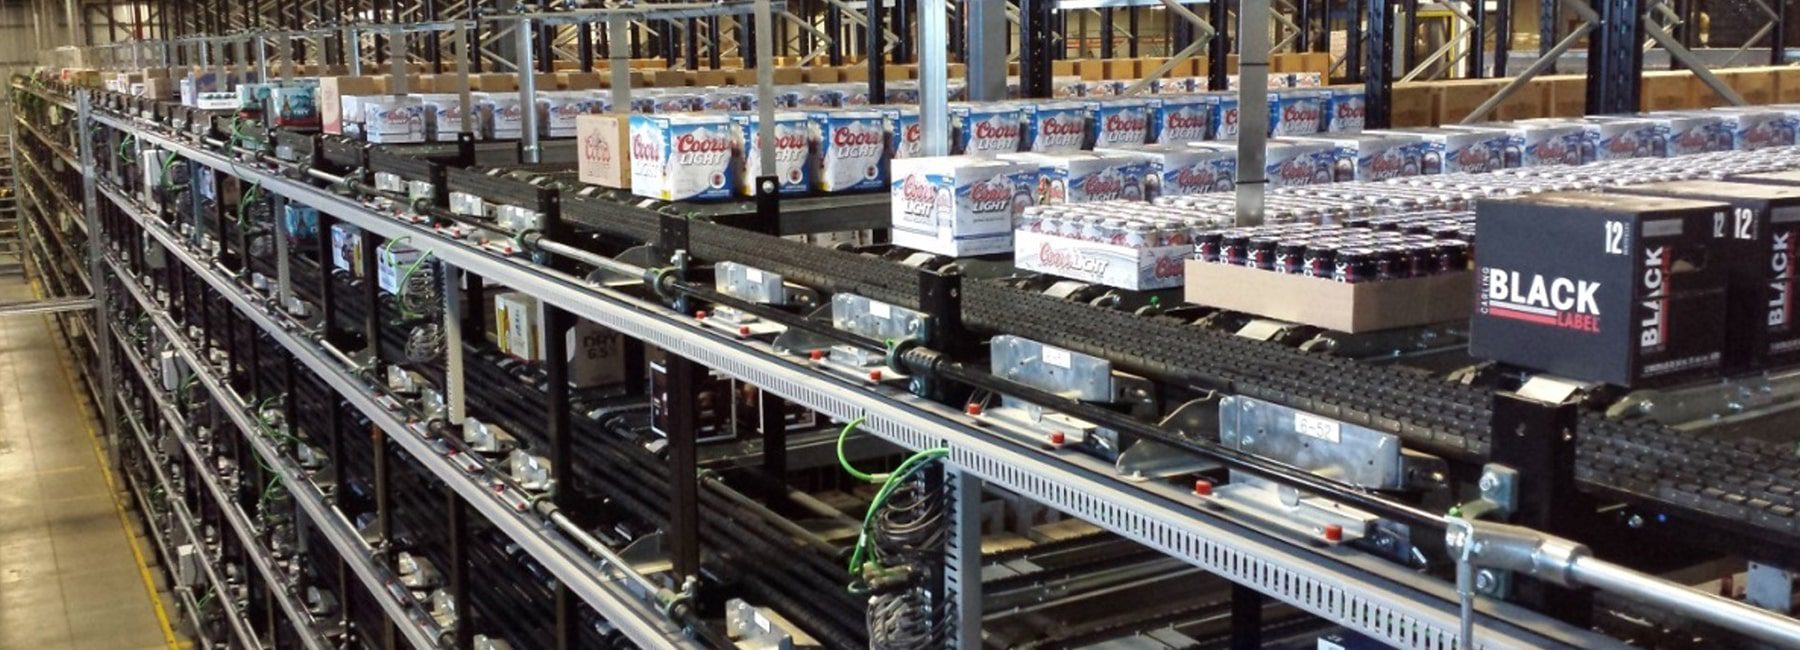 innopick - warehouse picking system – warehouse storage – warehouse automation – case picking – order picking solution – automated warehouse system – product picking